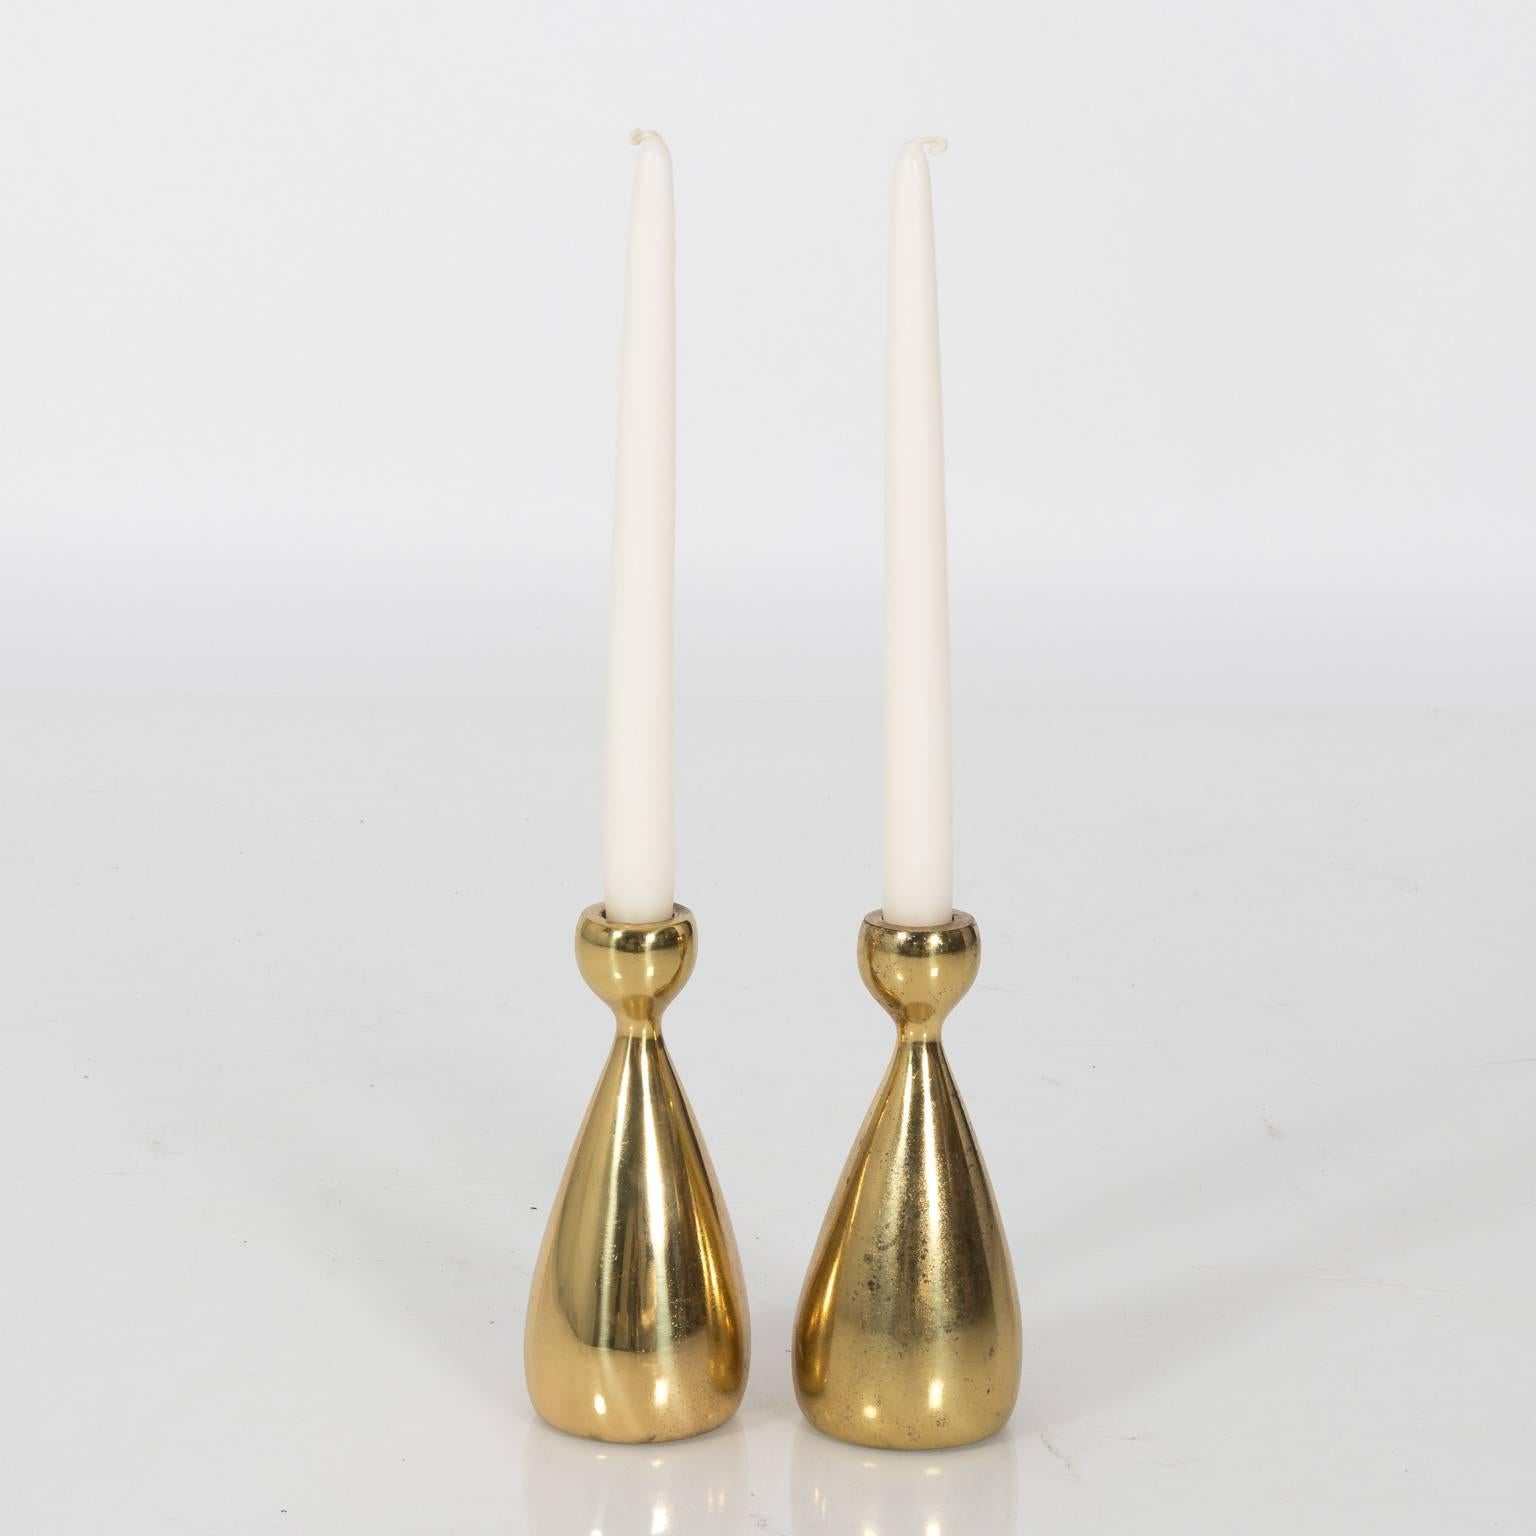 Circa 1960 pair of brass candleholders by Ben Debel.
